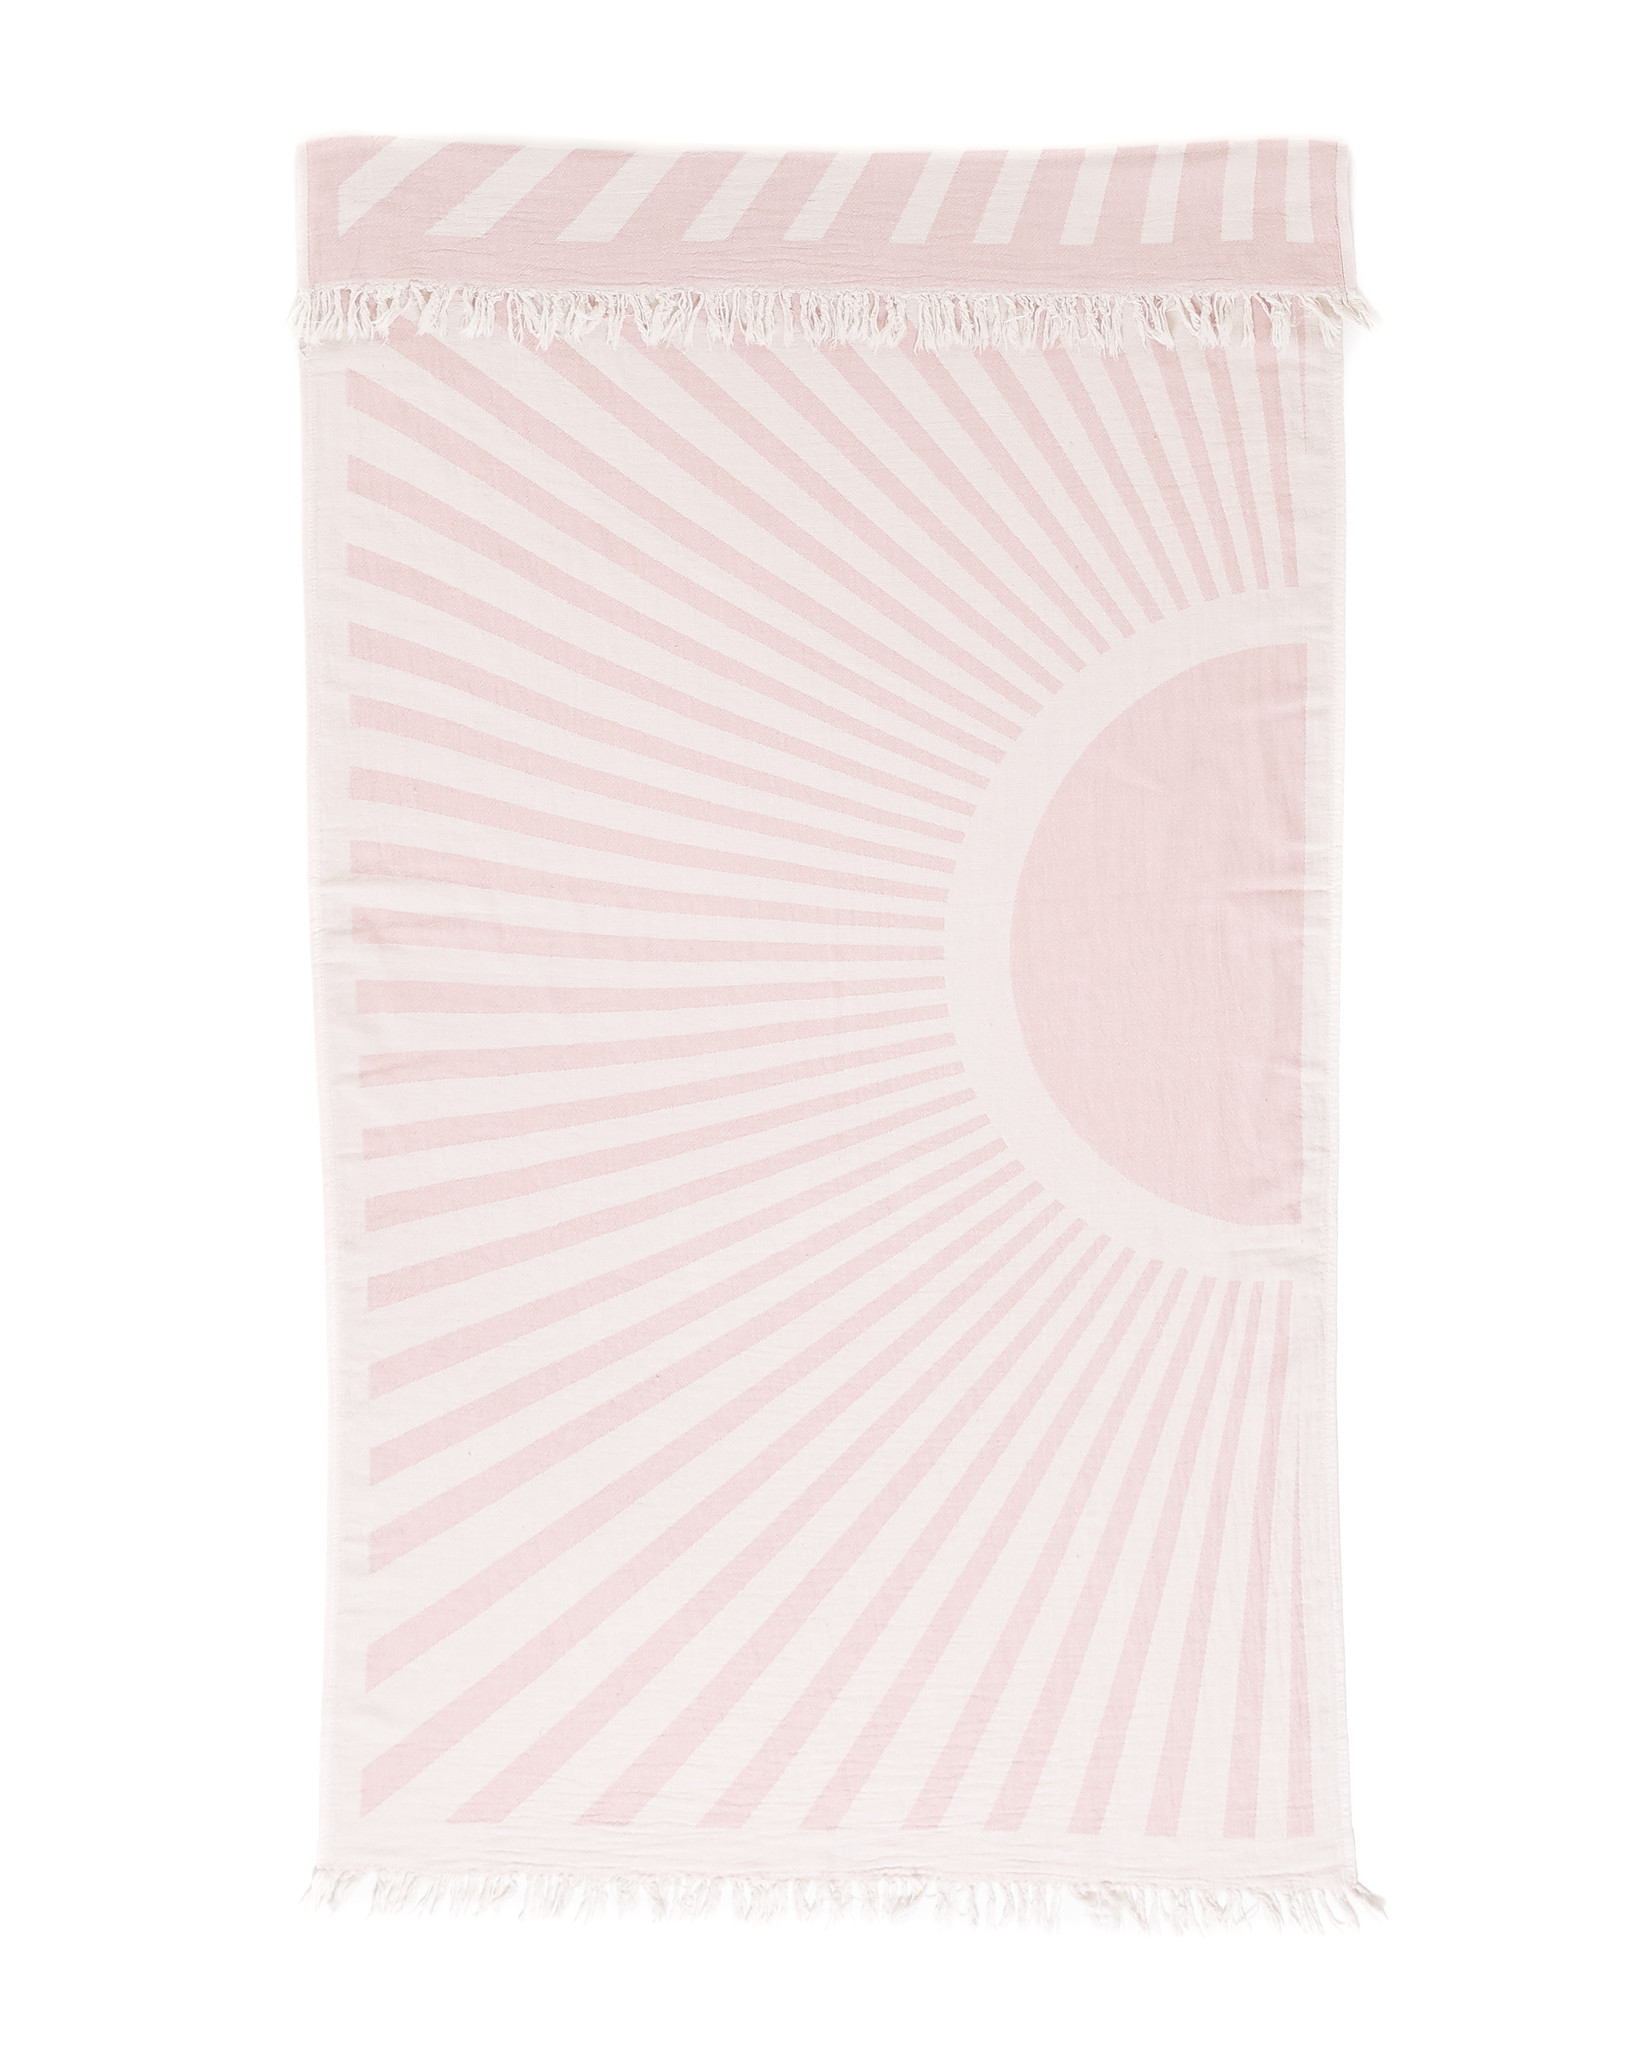 TOFINO TOWEL Sun Flare Towel